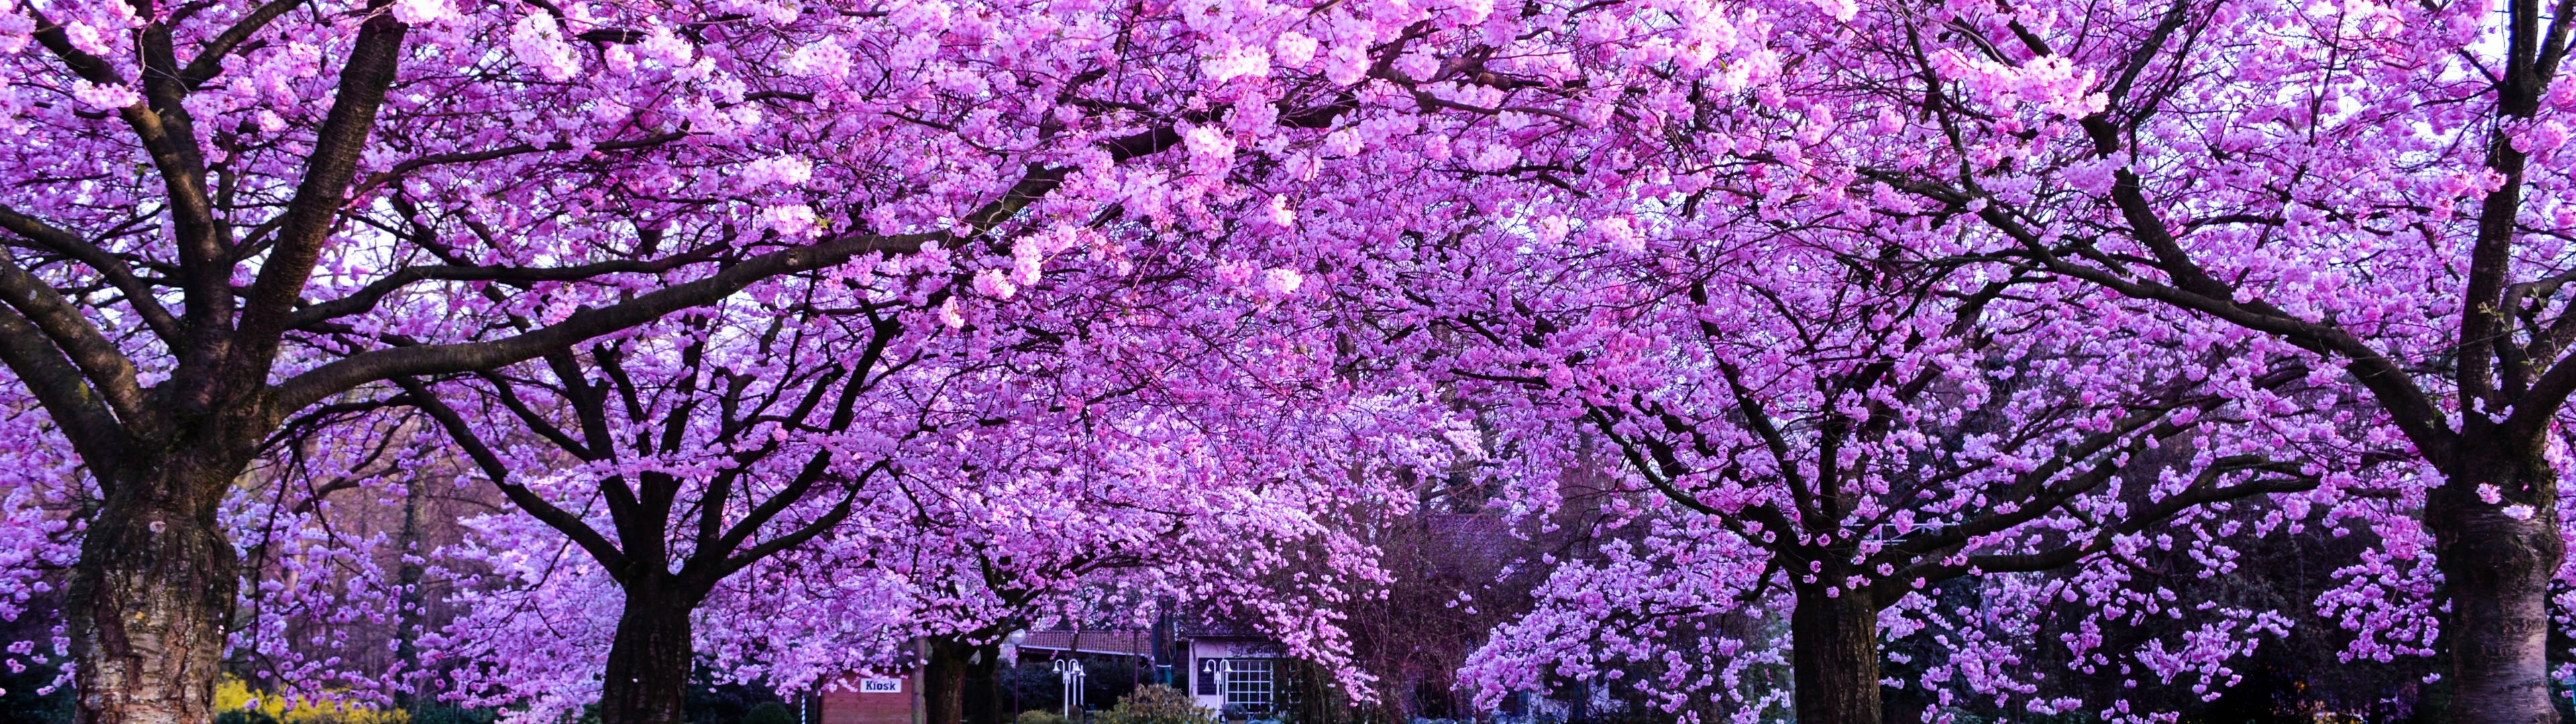 3840x1080 4k Cherry Blossom Trees Background